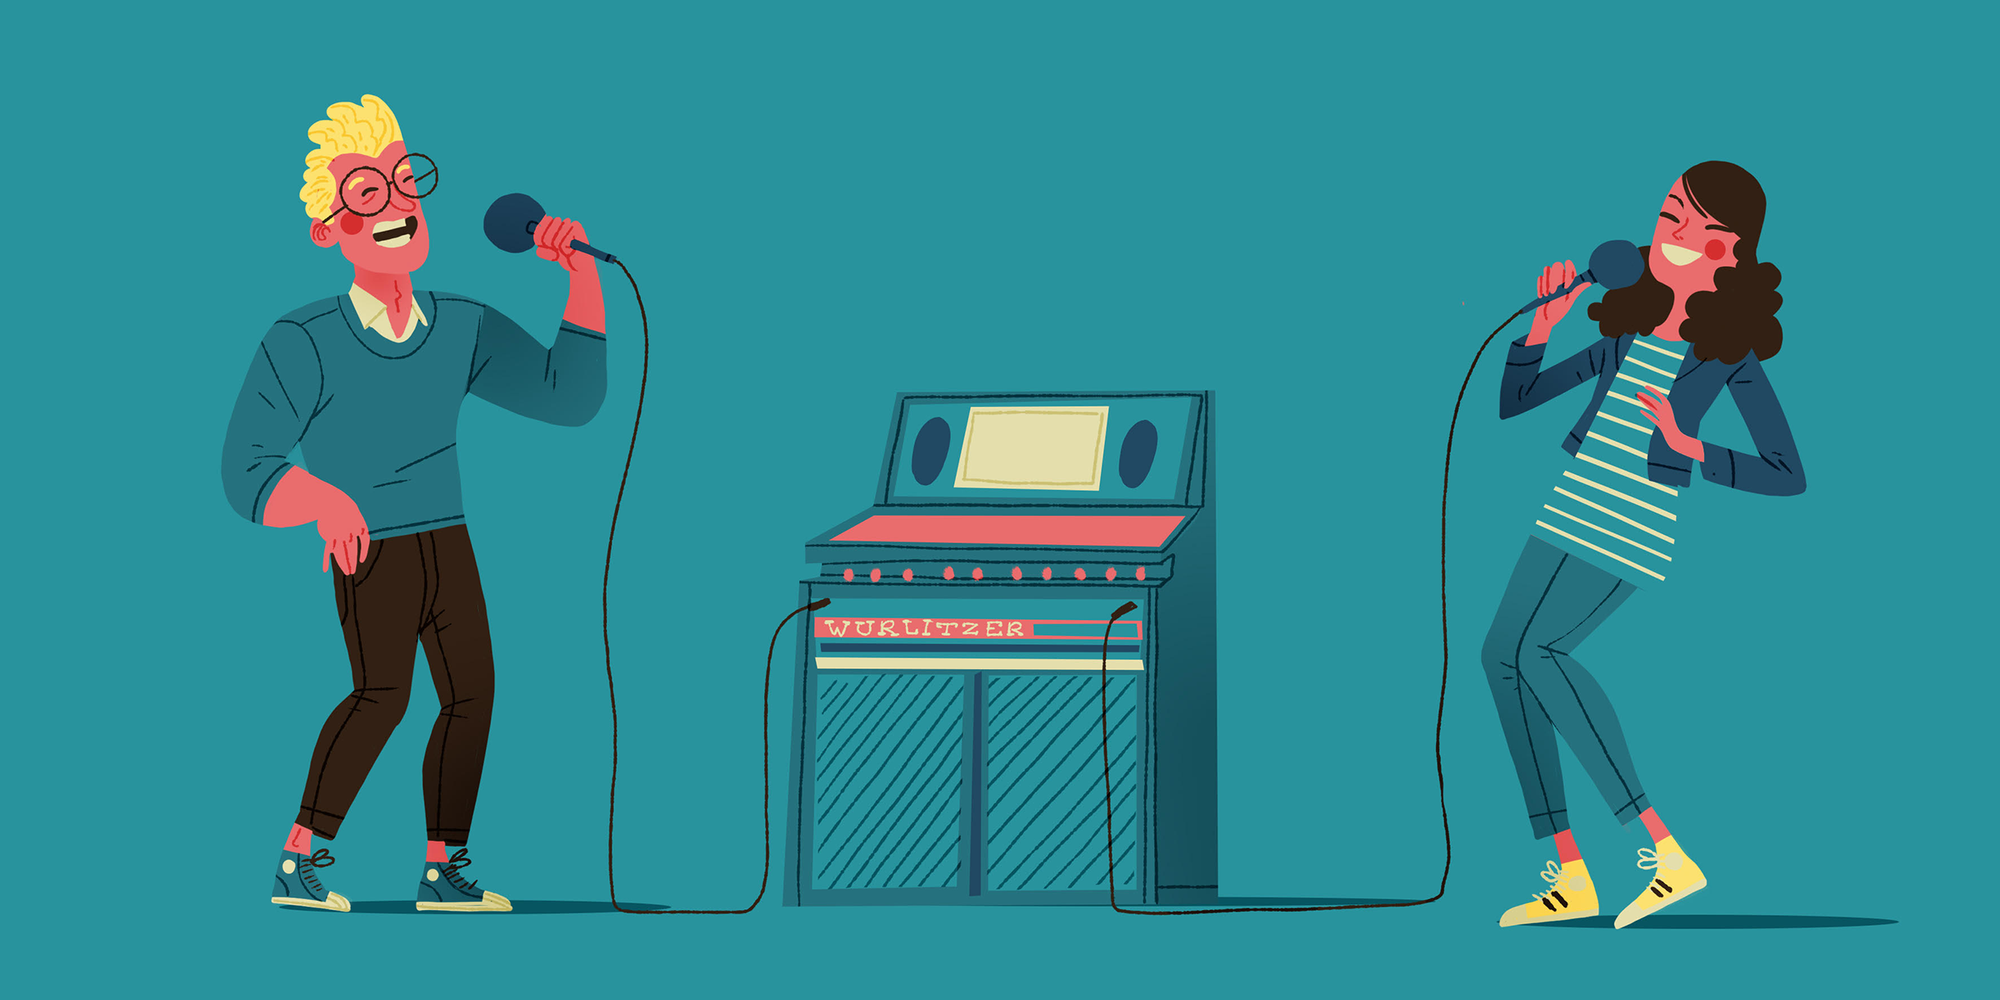 Illustration of two people singing at a karaoke machine.